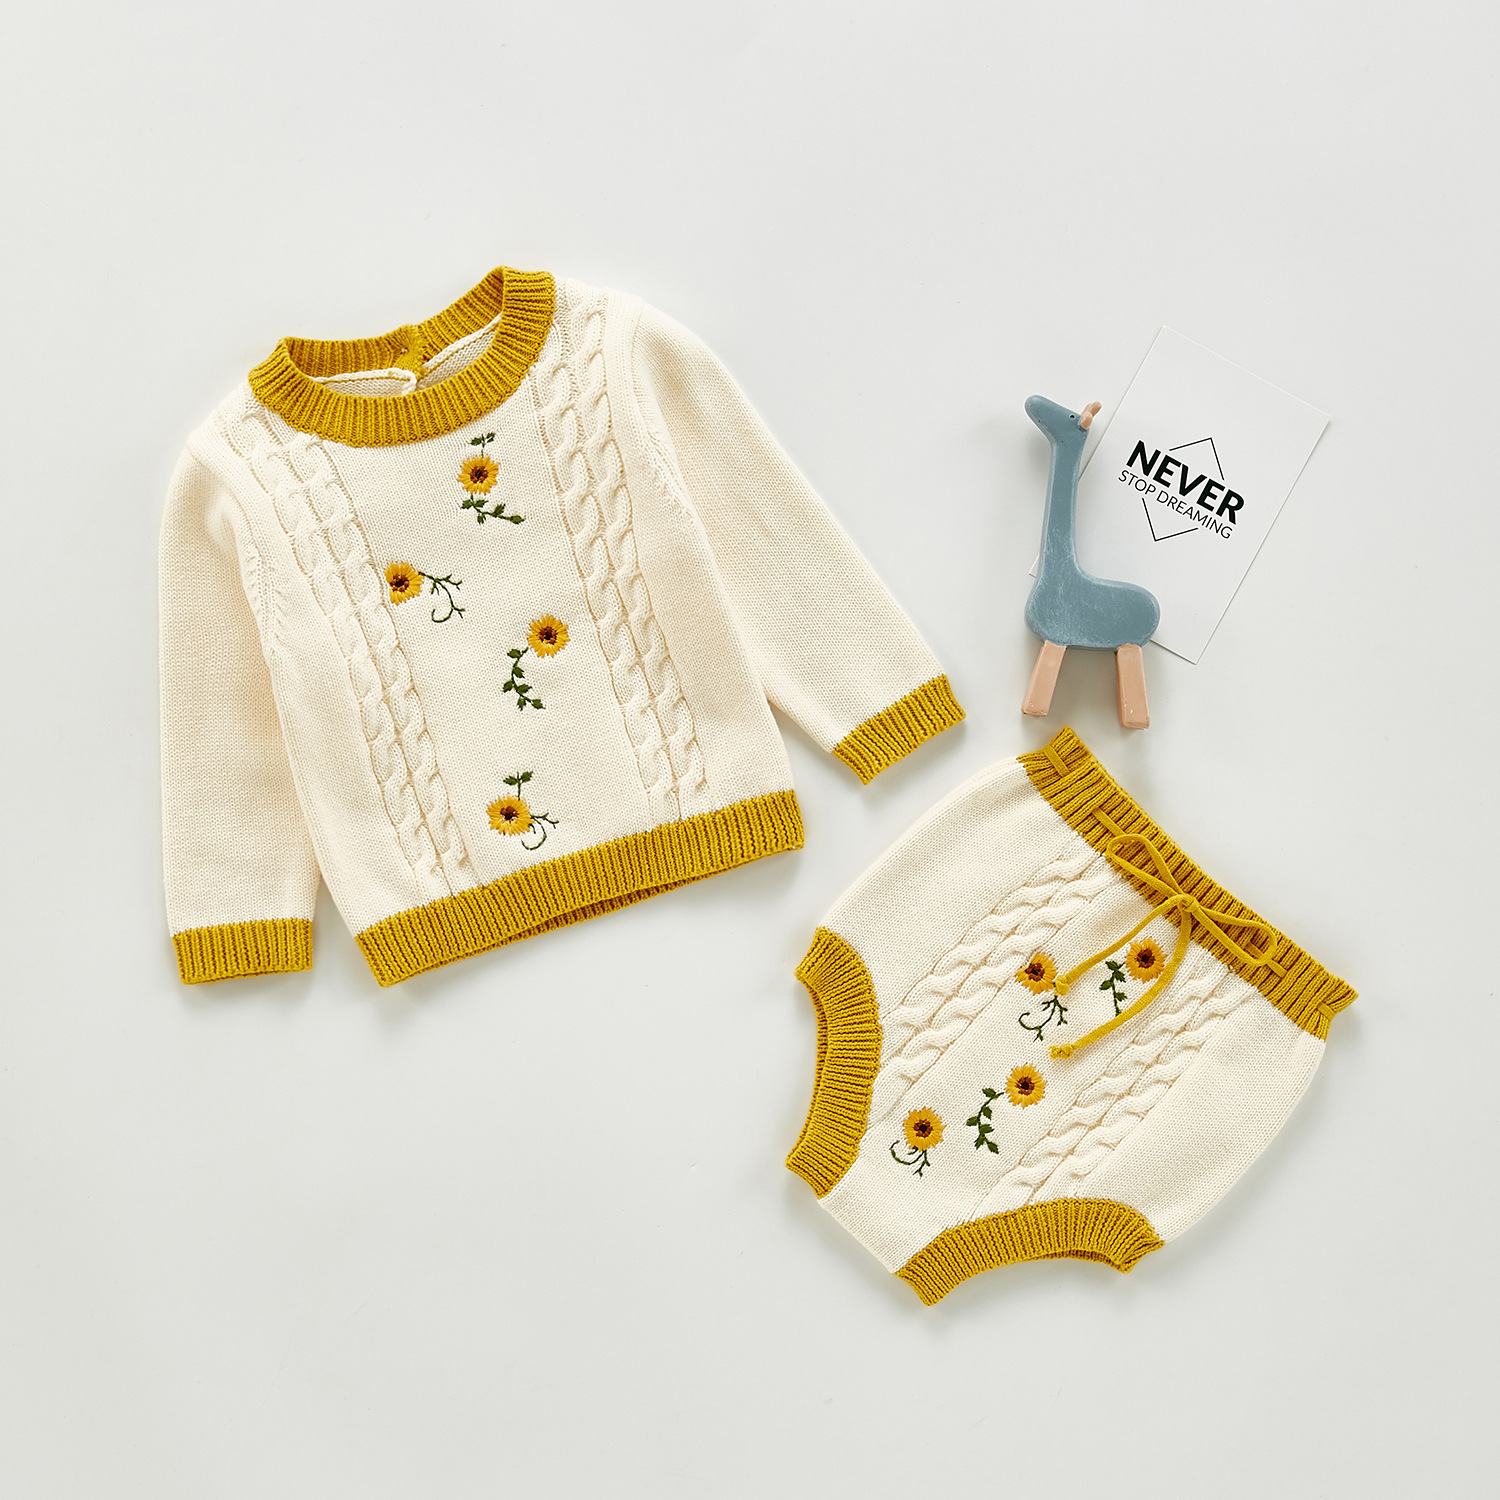 Kleding Meisjeskleding Babykleding voor meisjes Truien 12-18 months ready to ship Handmade Knitted Baby Girl's Spring Sweater 